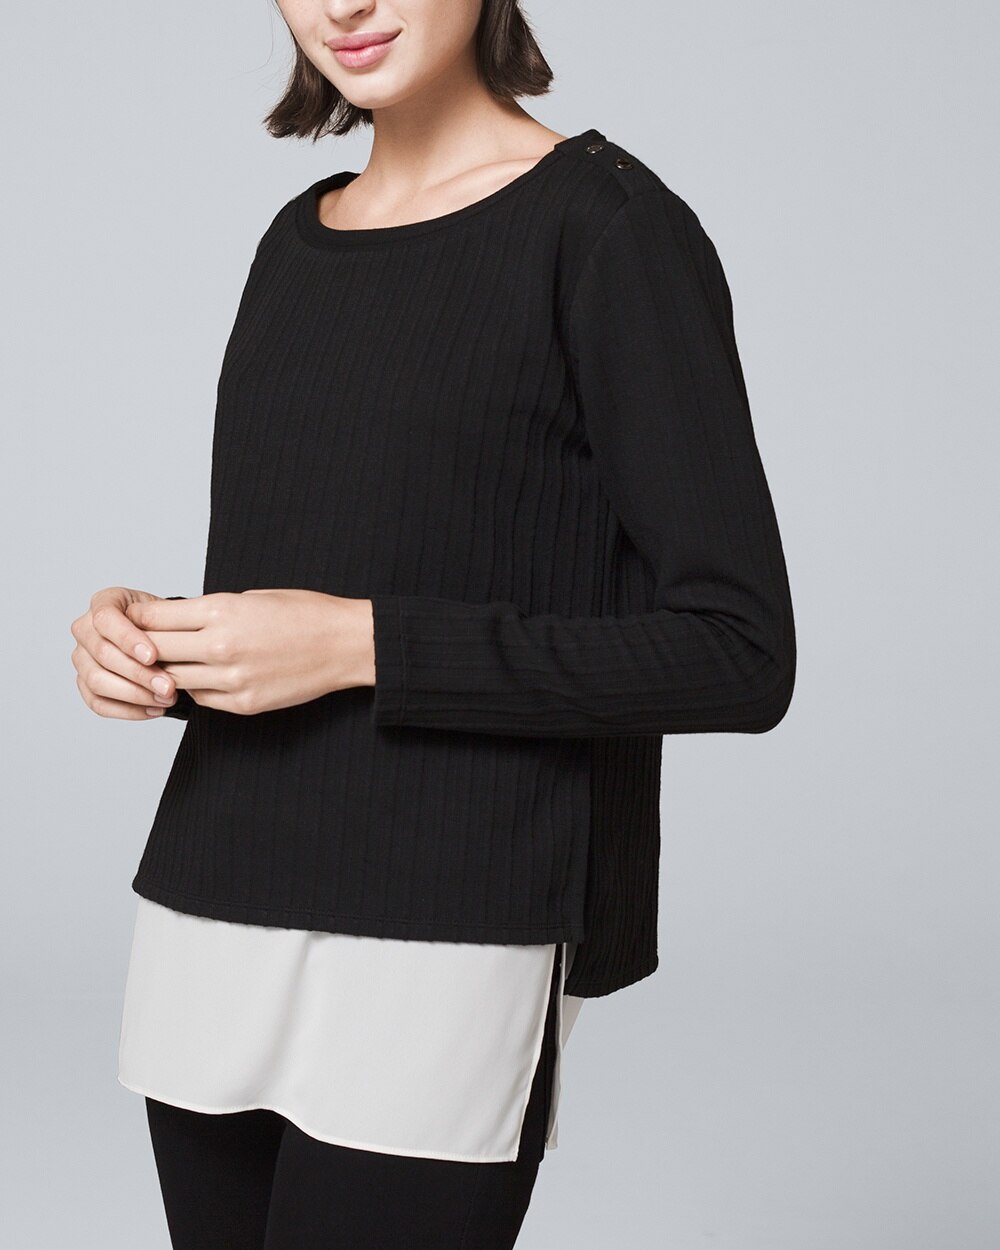 Shop Women's Fall Sweaters - White House Black Market